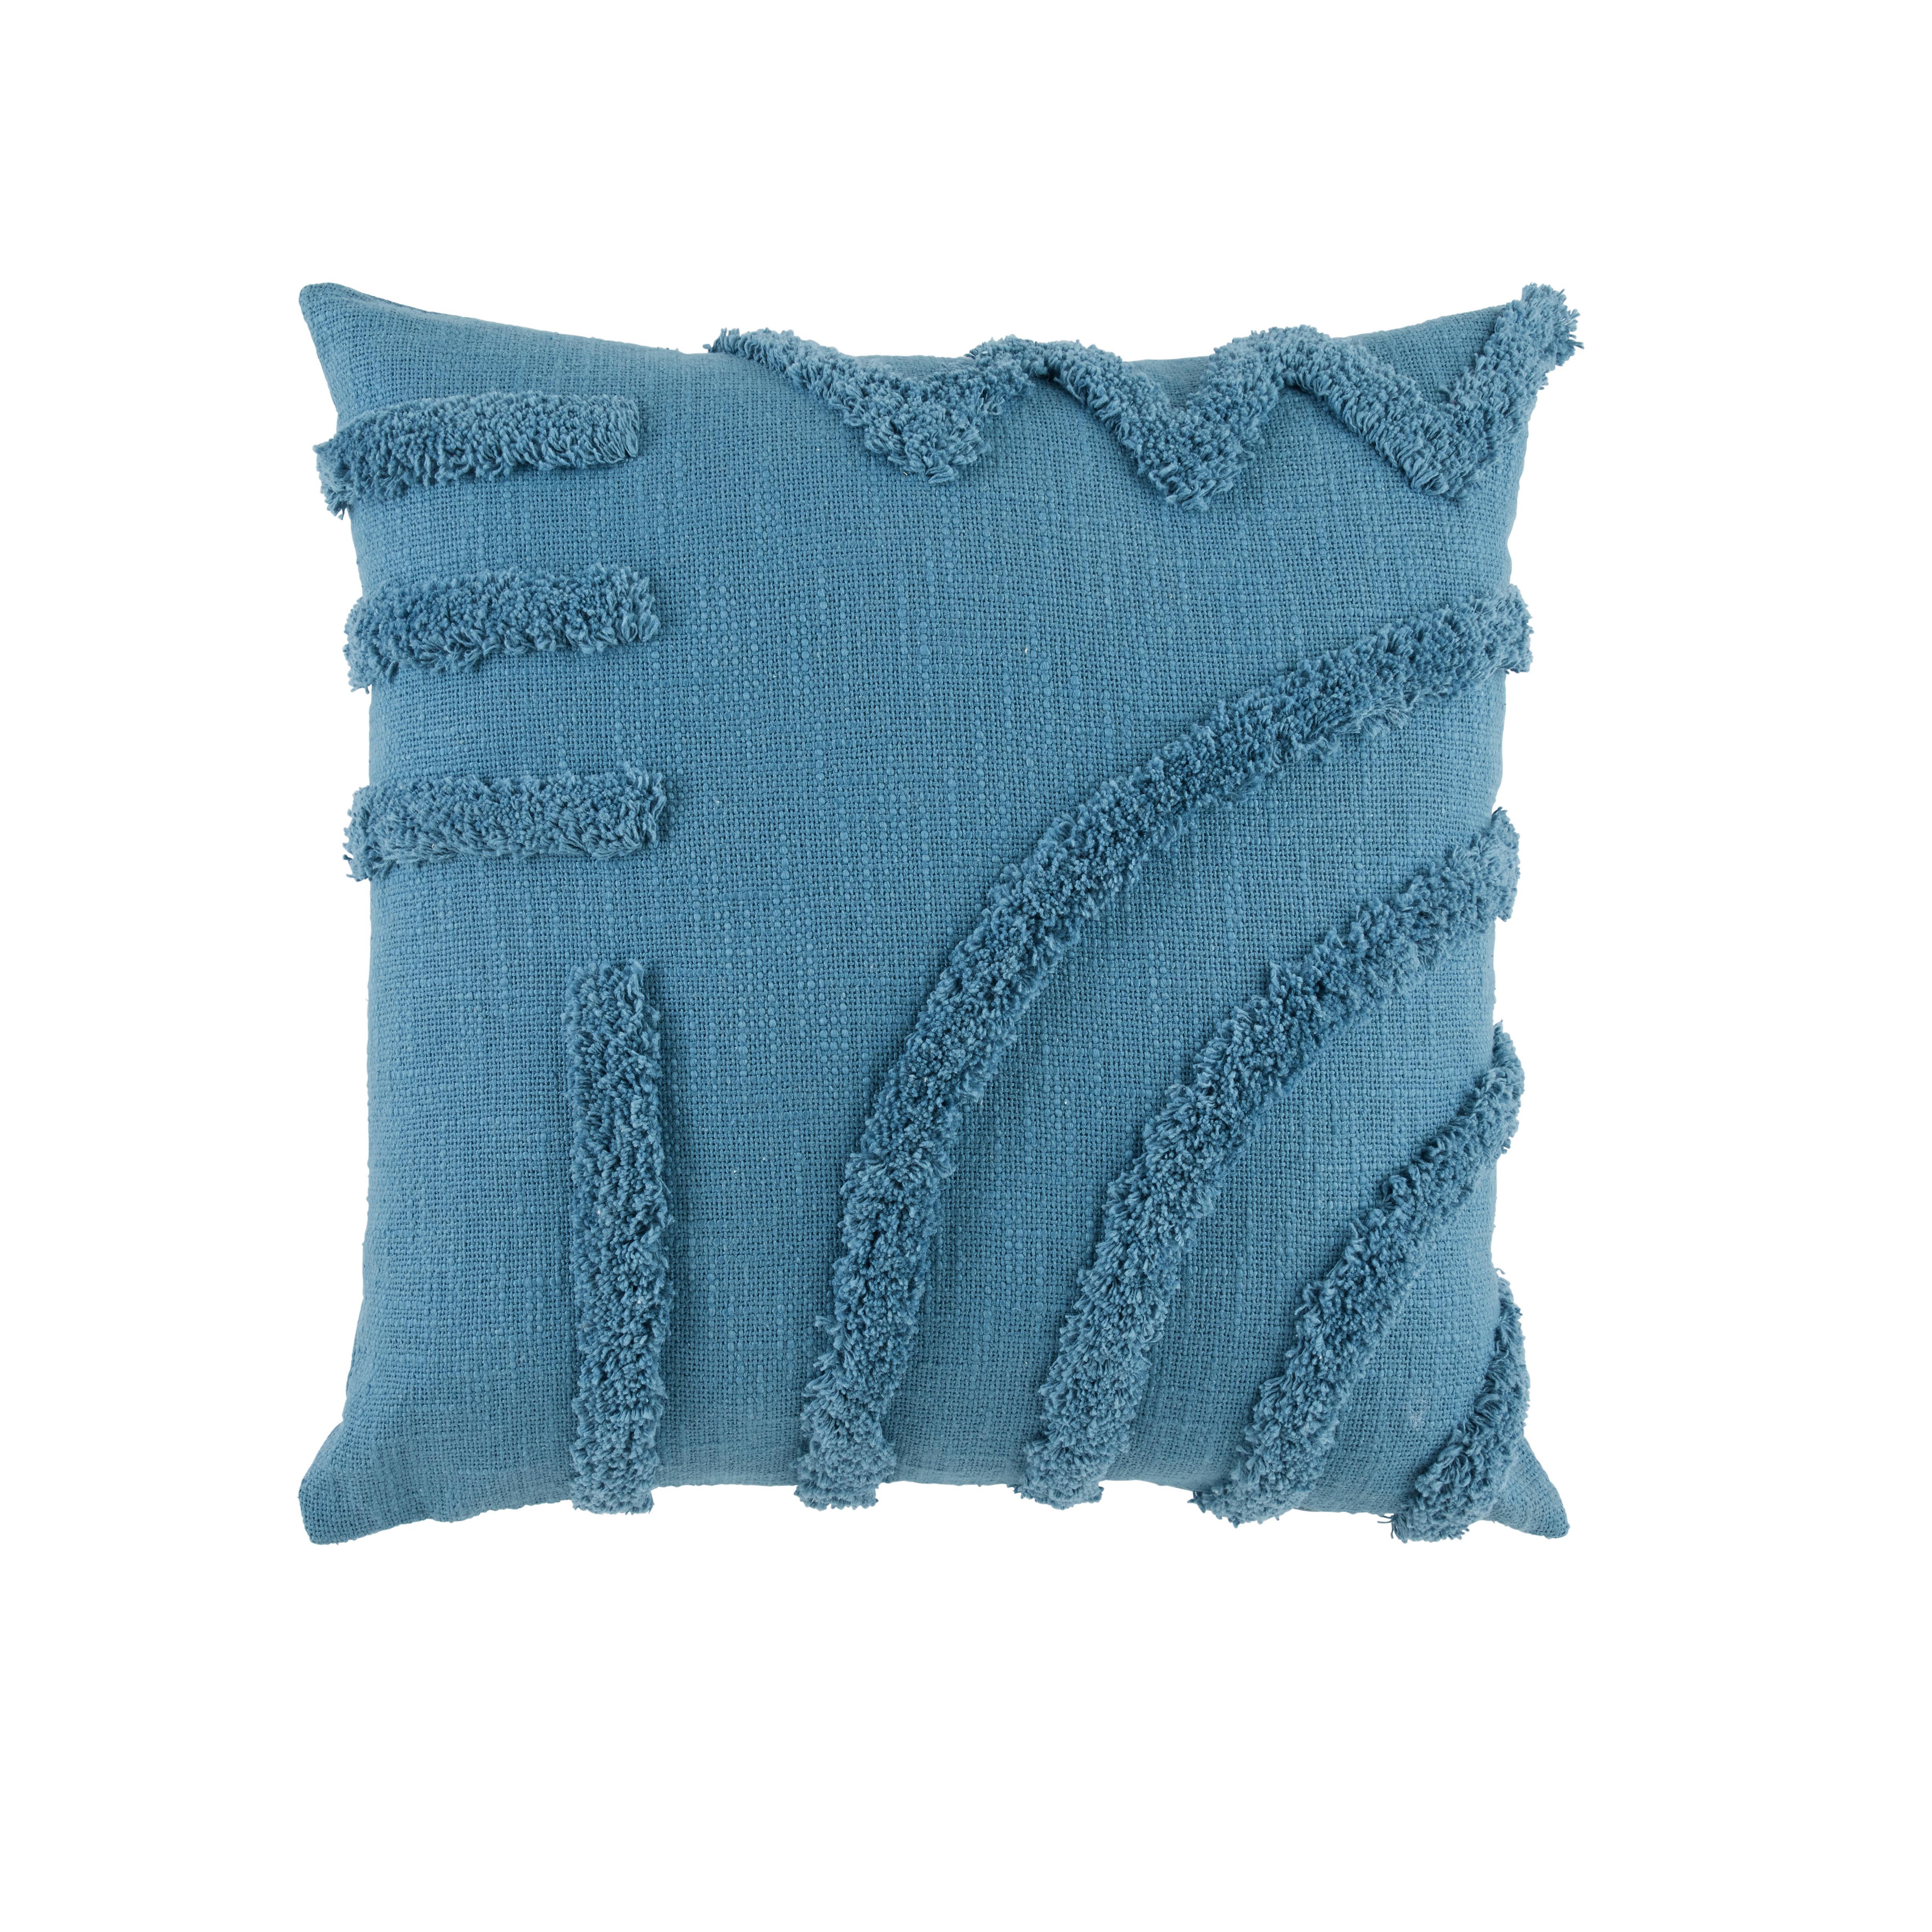 Zierkissen Bob in Blau ca. 45x45cm - Blau, Modern, Textil (45/45cm) - Premium Living